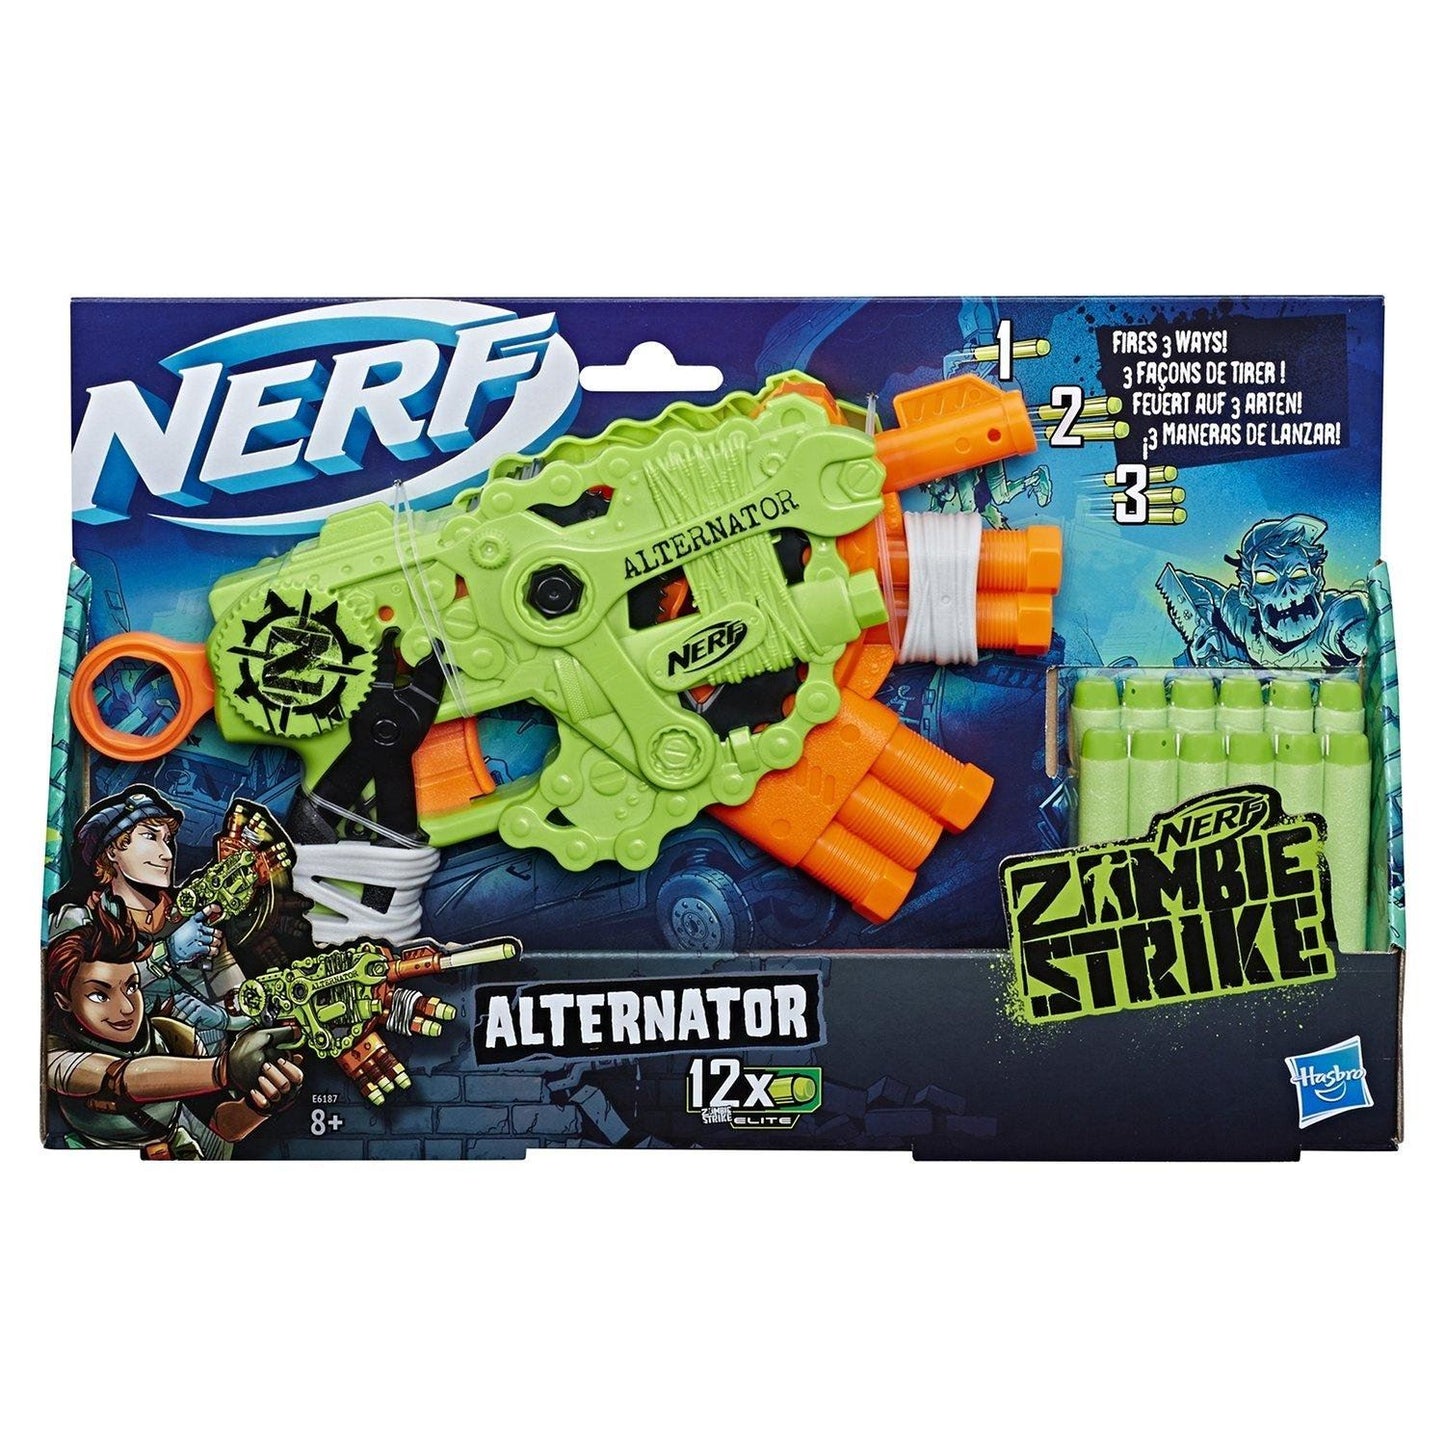 Alternator Dart Blaster E6187 NERF Zombie Strike